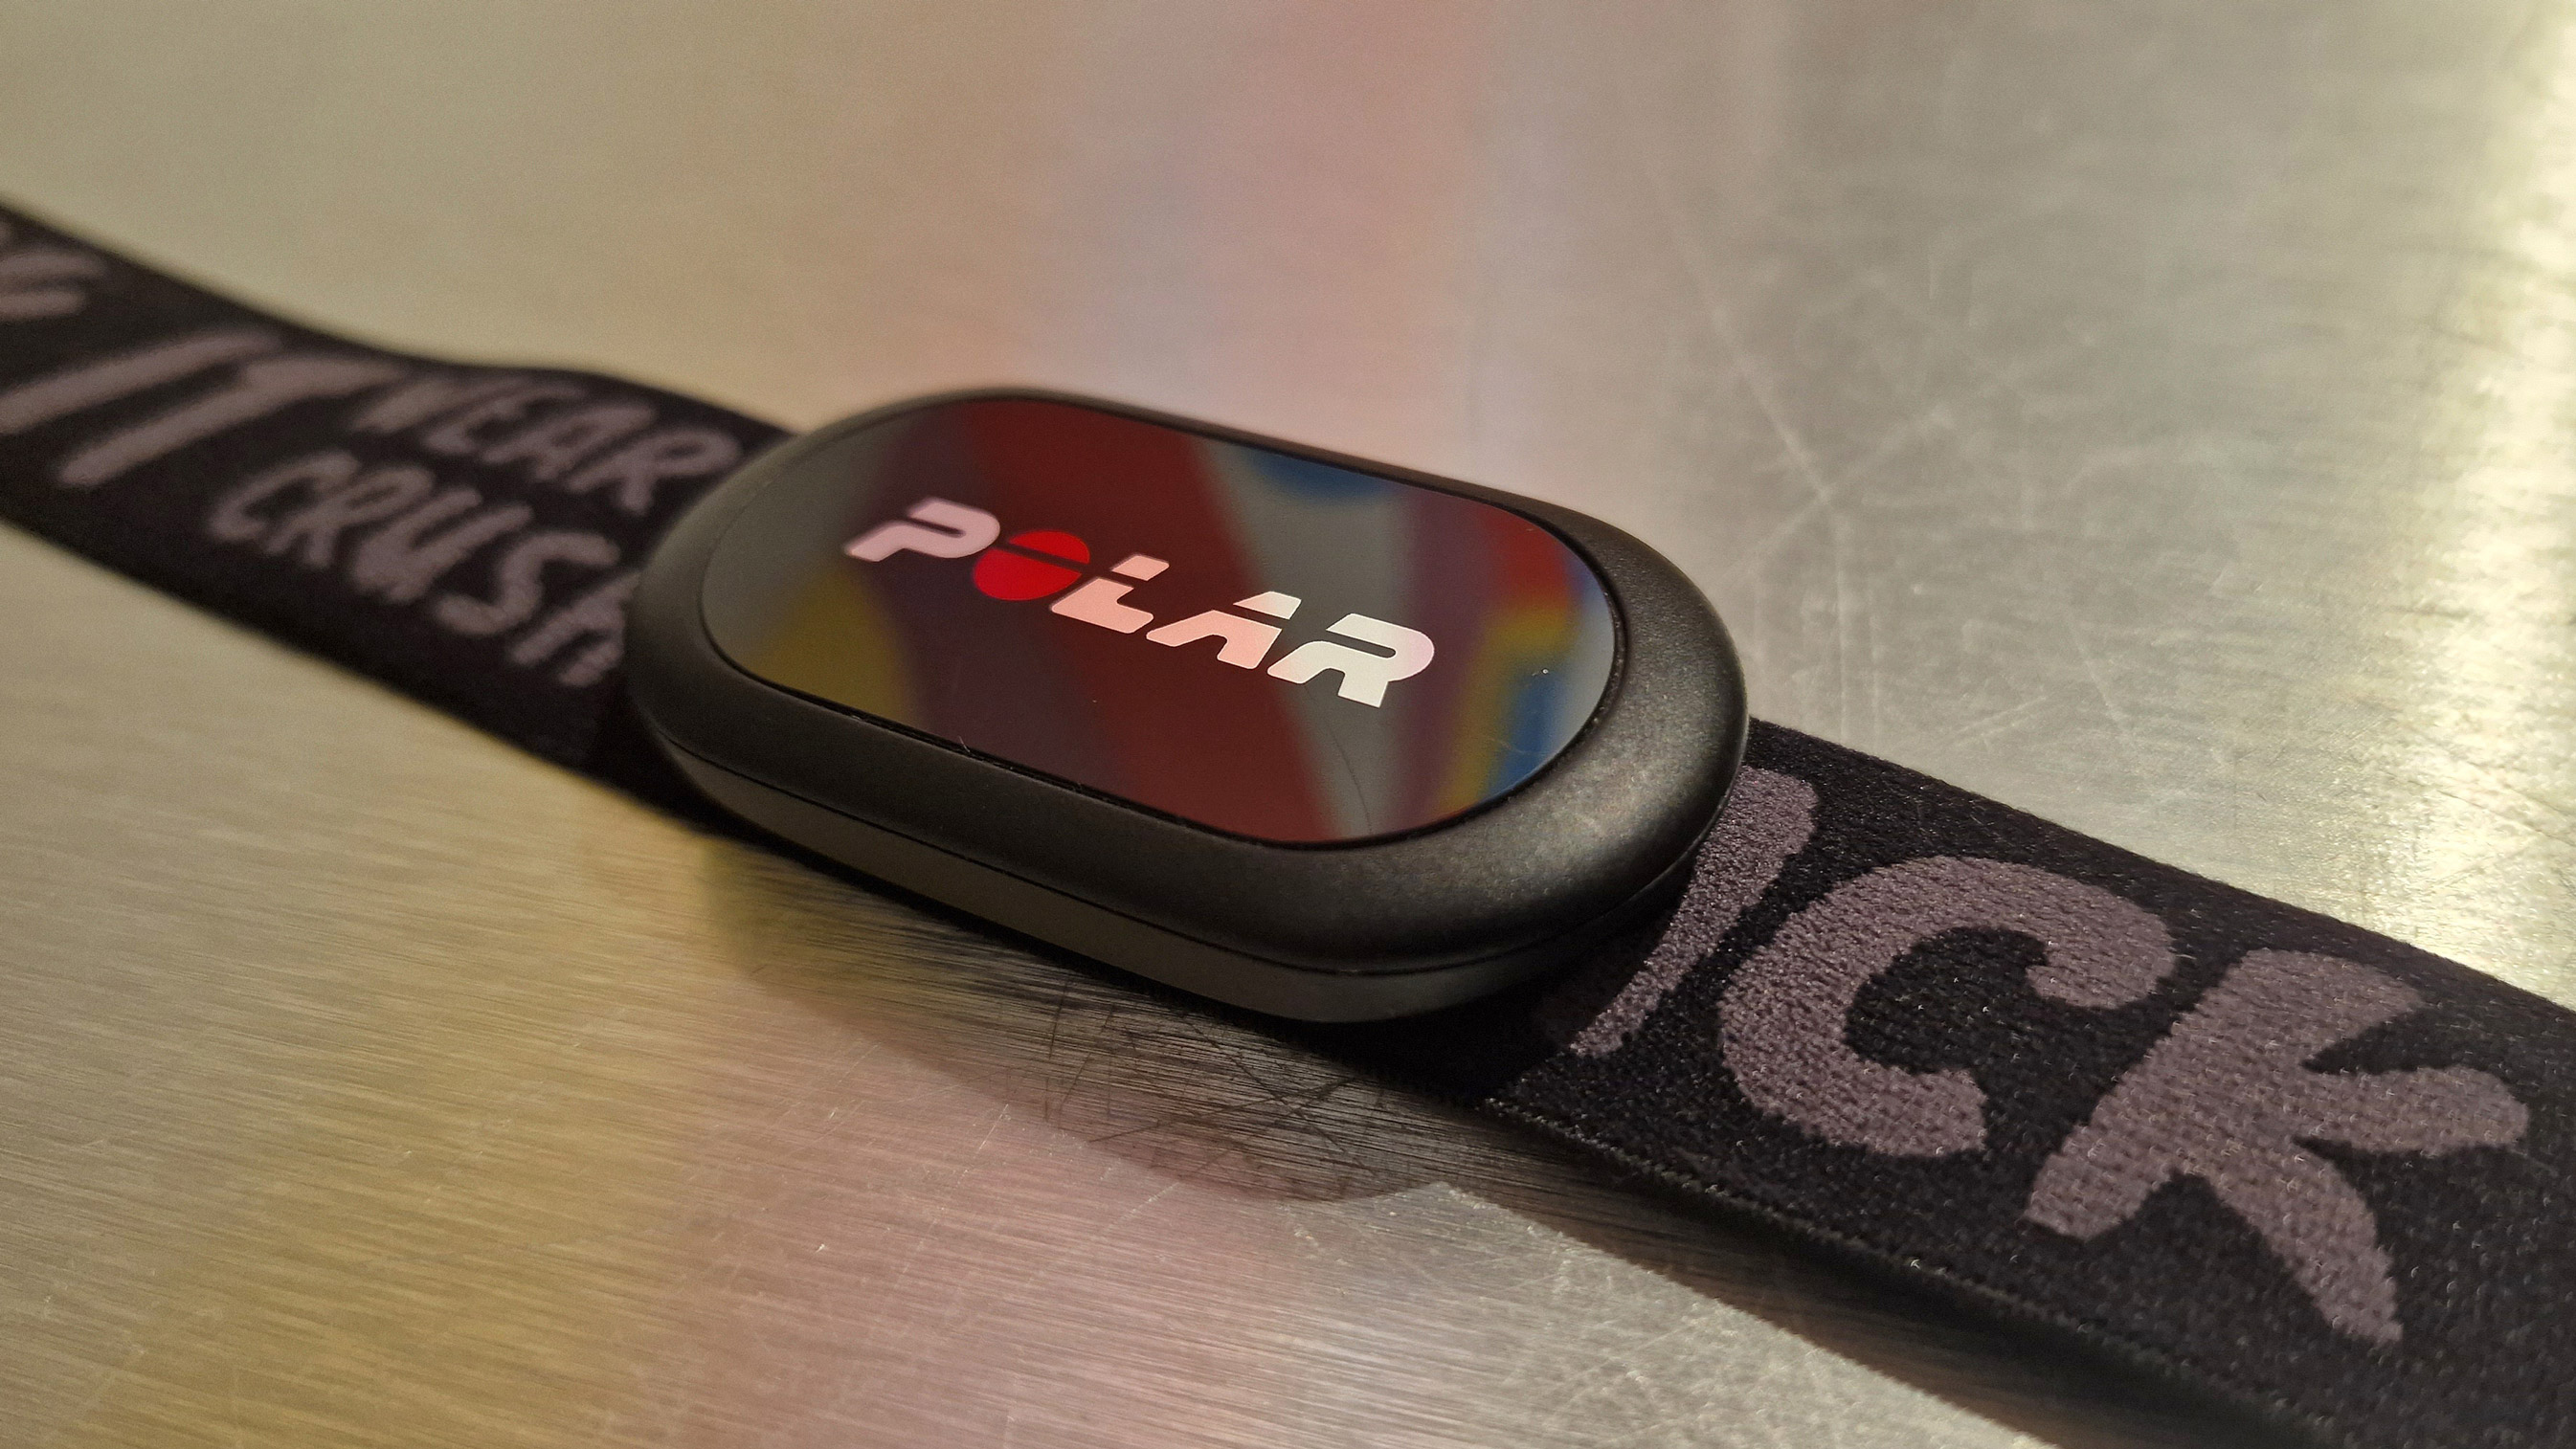 Polar H10 Heart Rate Sensor review: Better than a smartwatch for